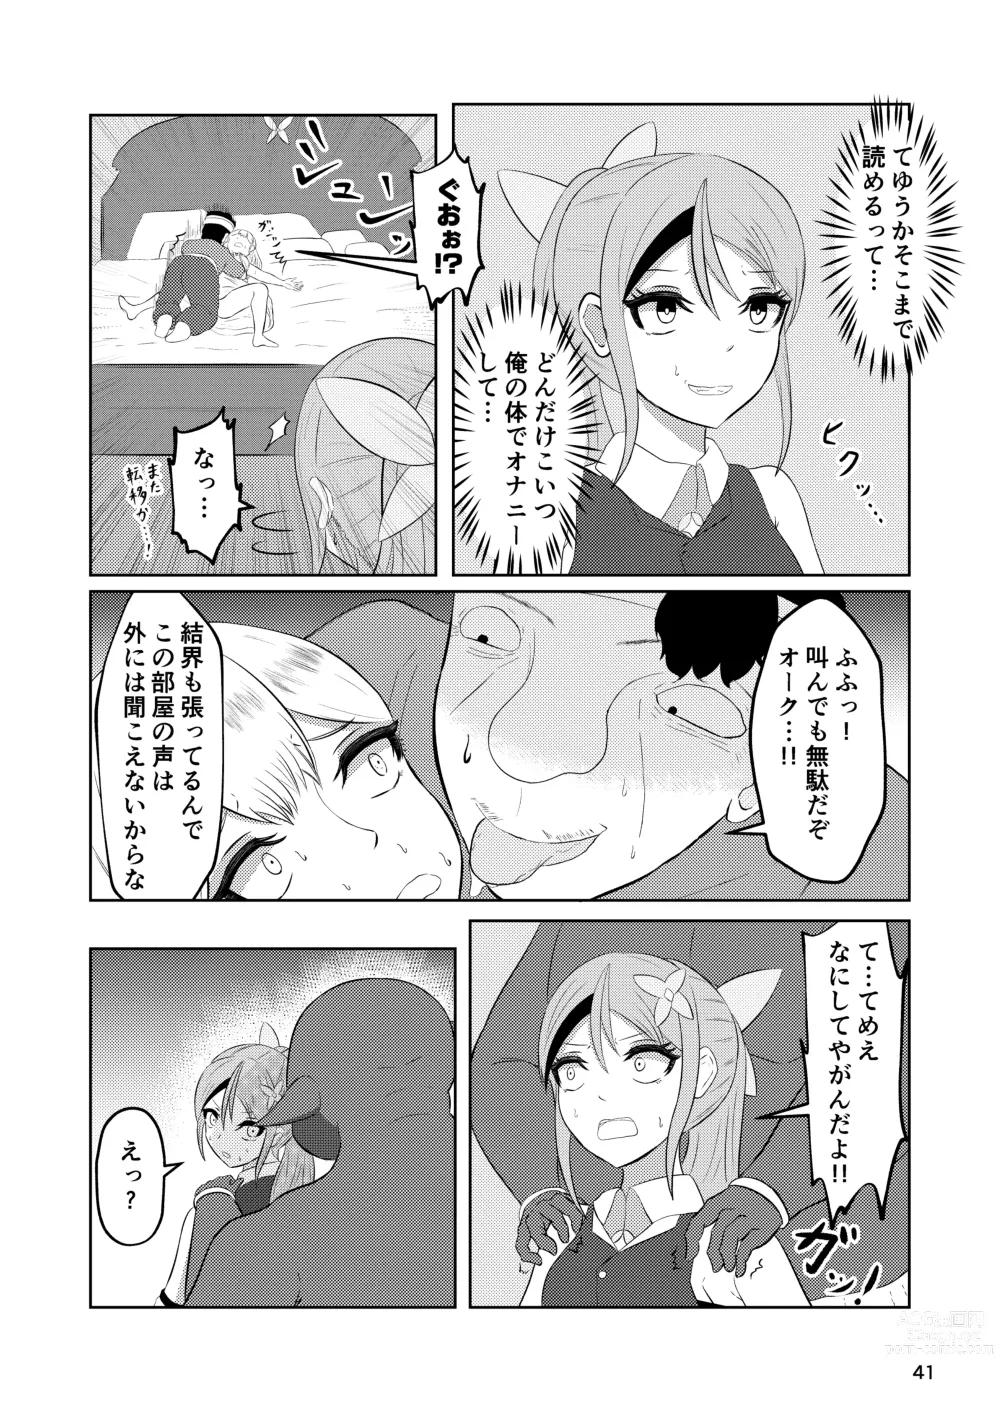 Page 40 of doujinshi Hime to Kishi  wa Nukarumi ni Kawaru